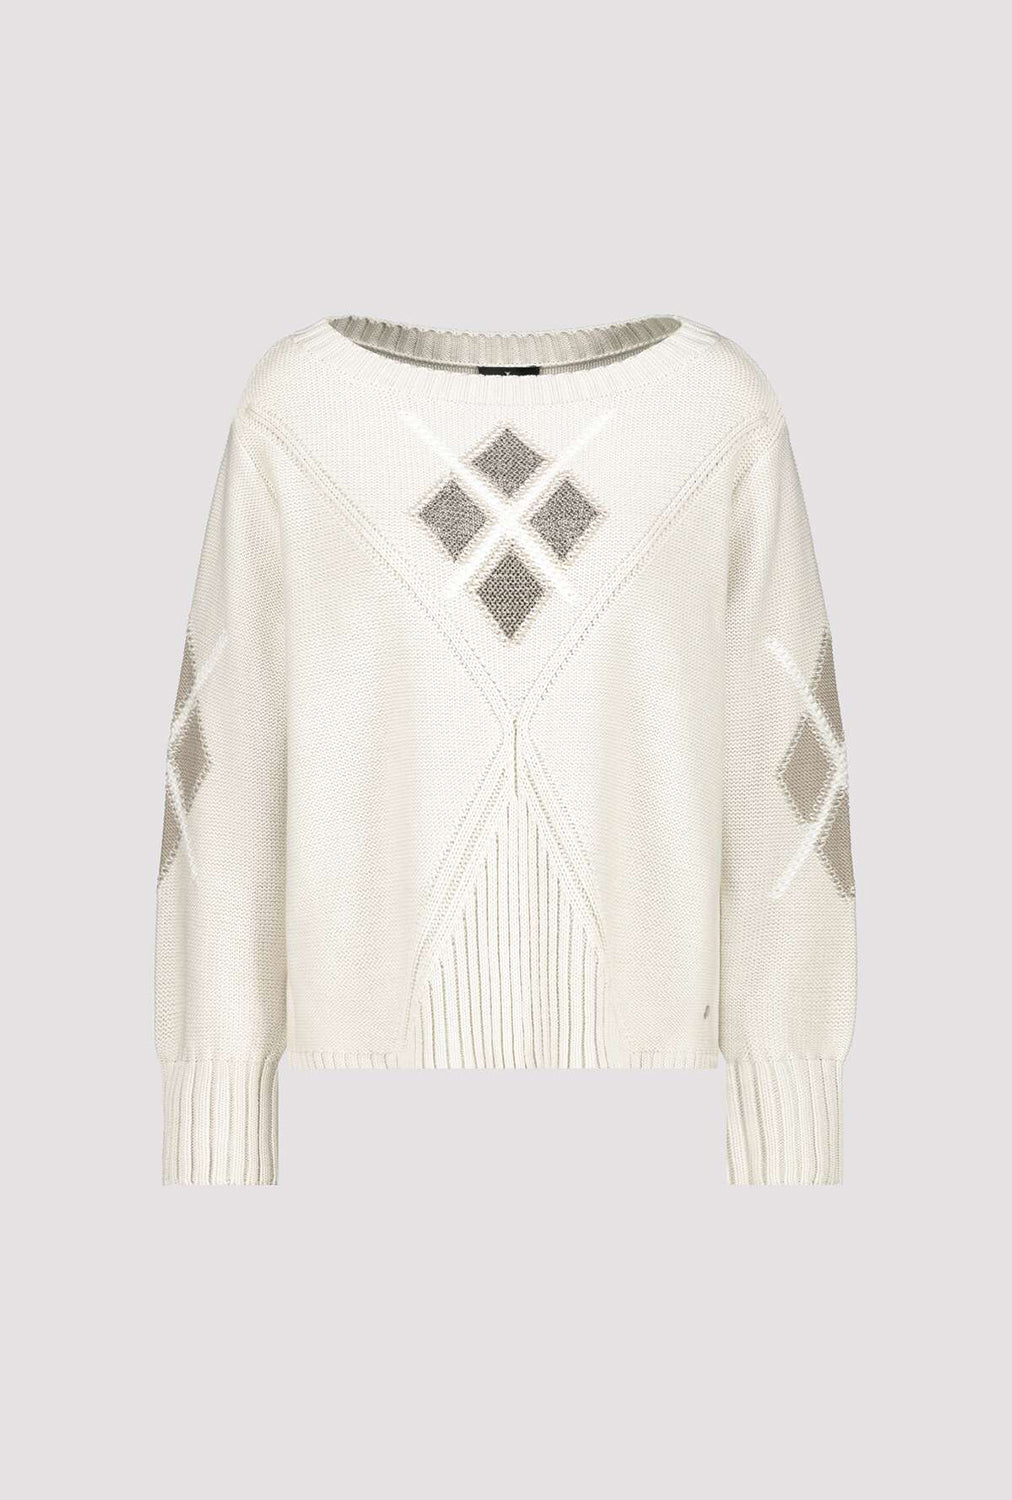 Monari Embellished Sweater 807515